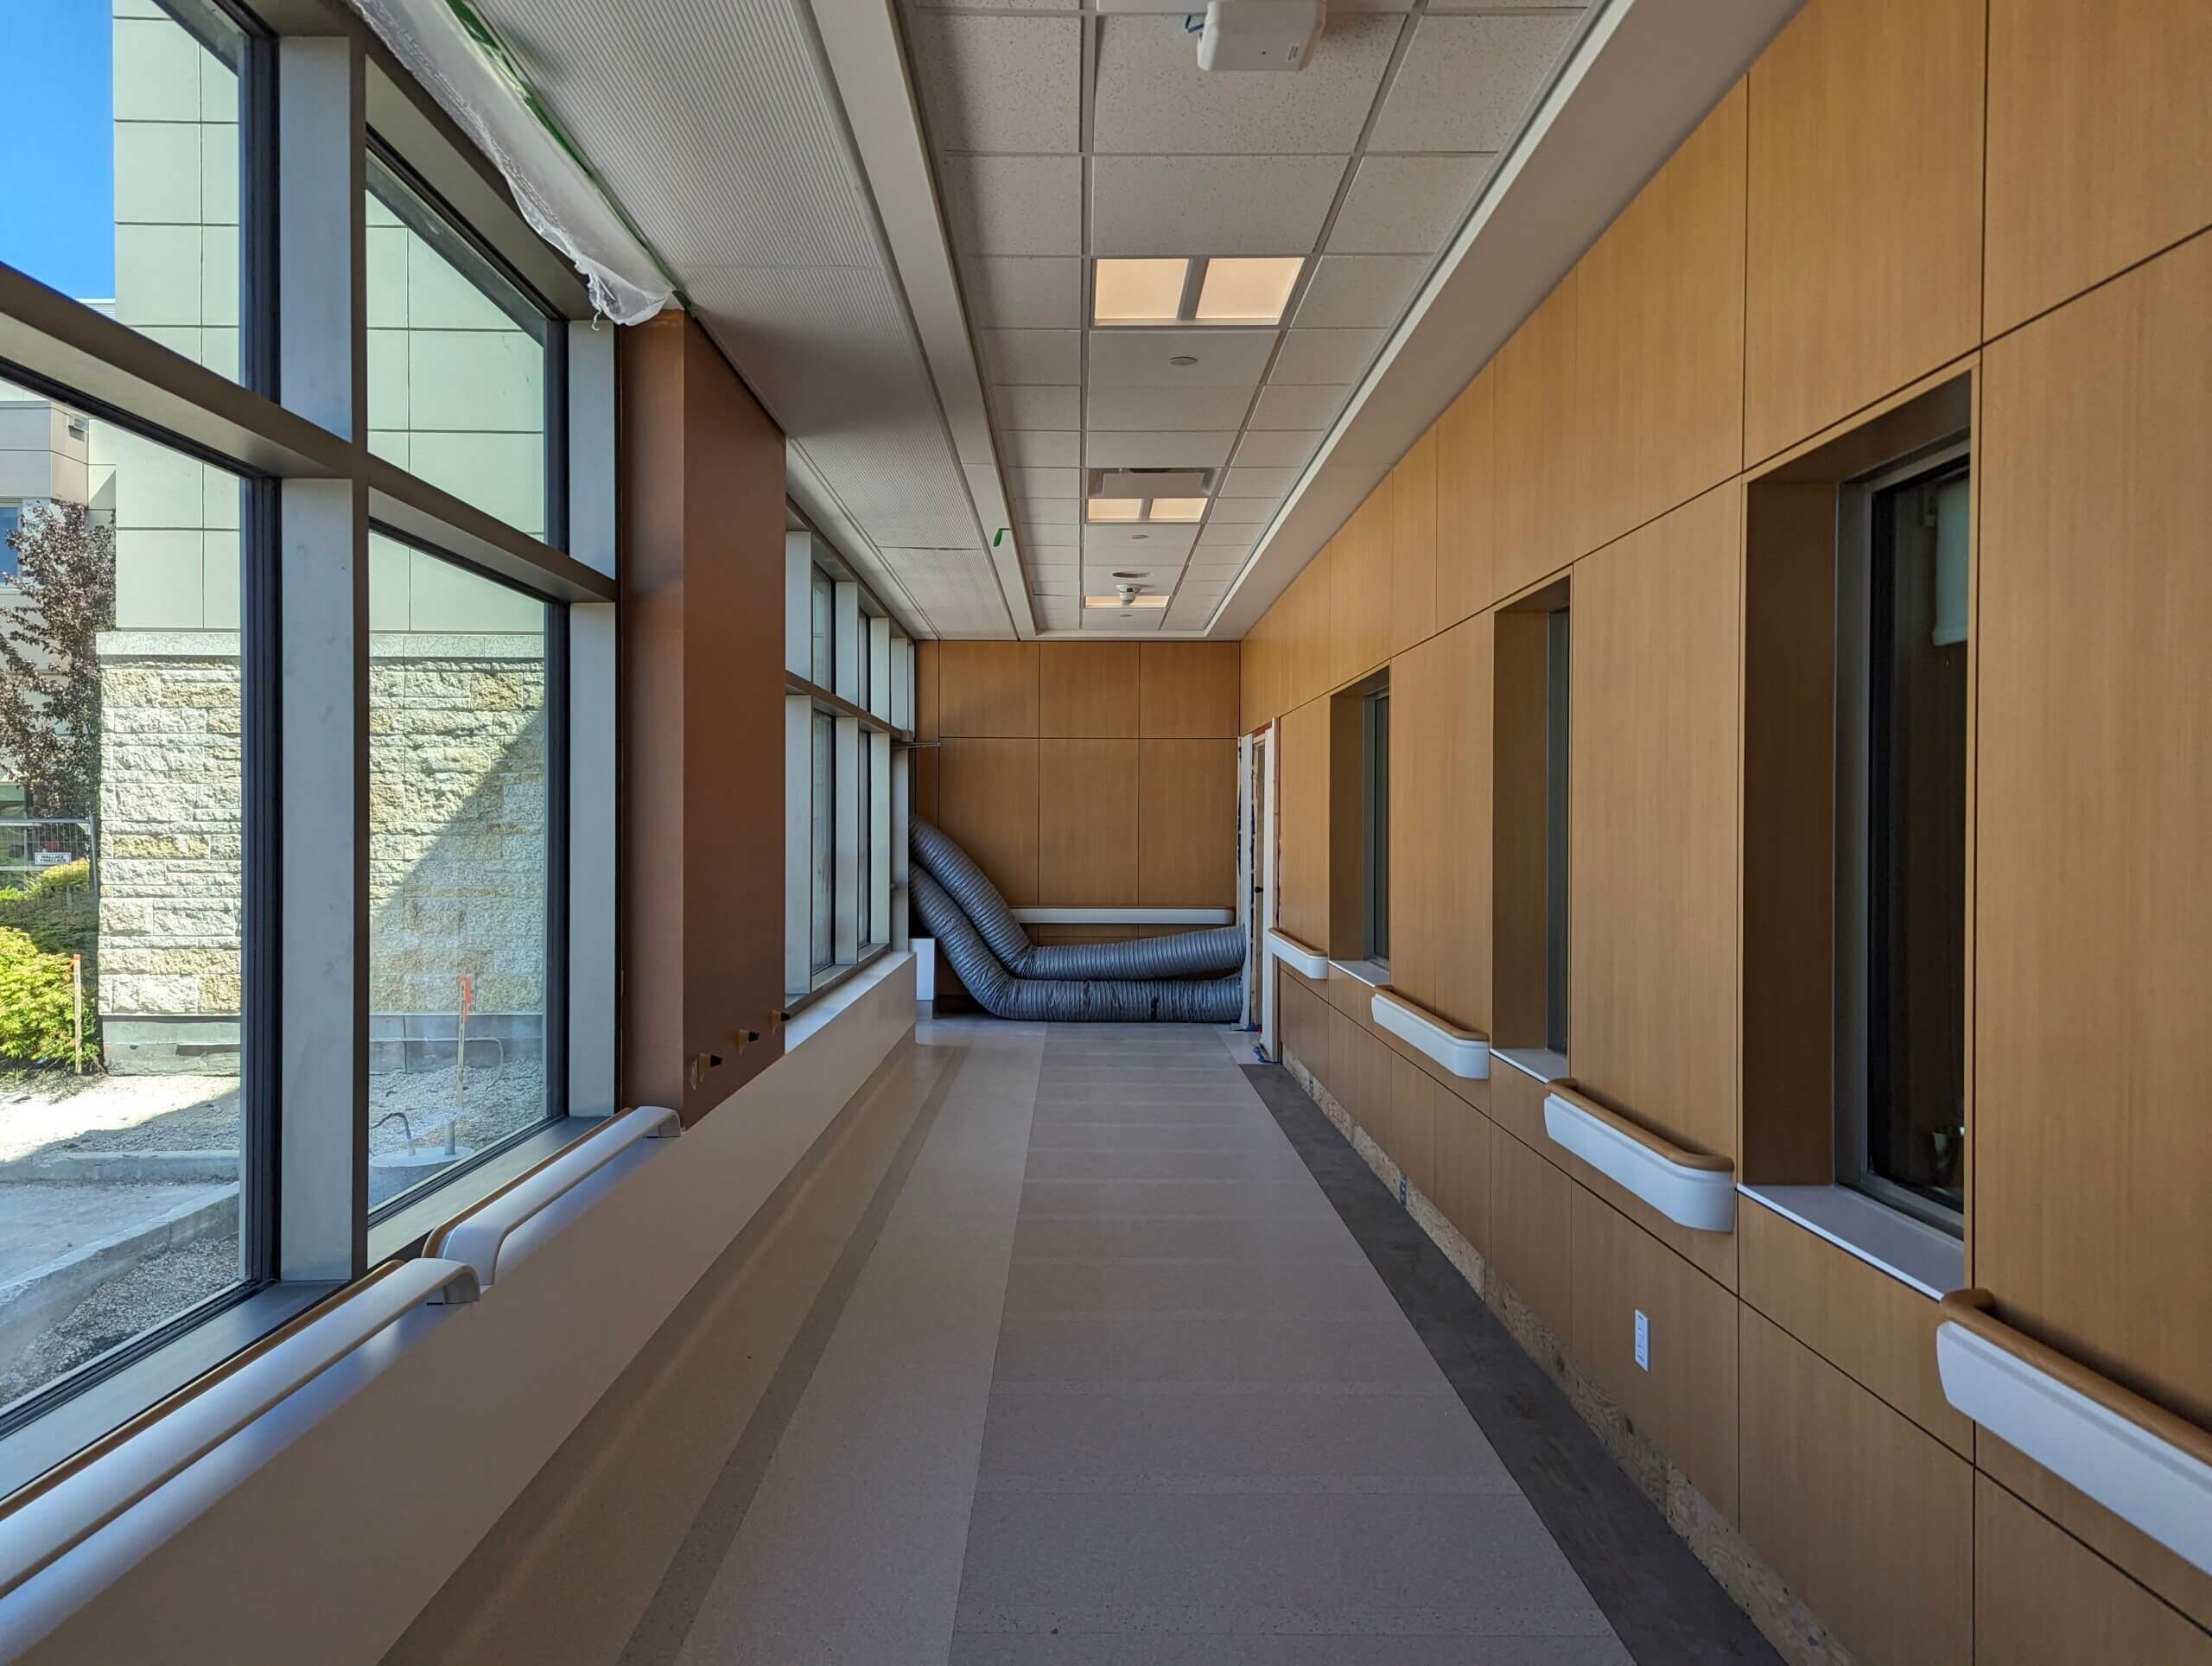 hallway with windows